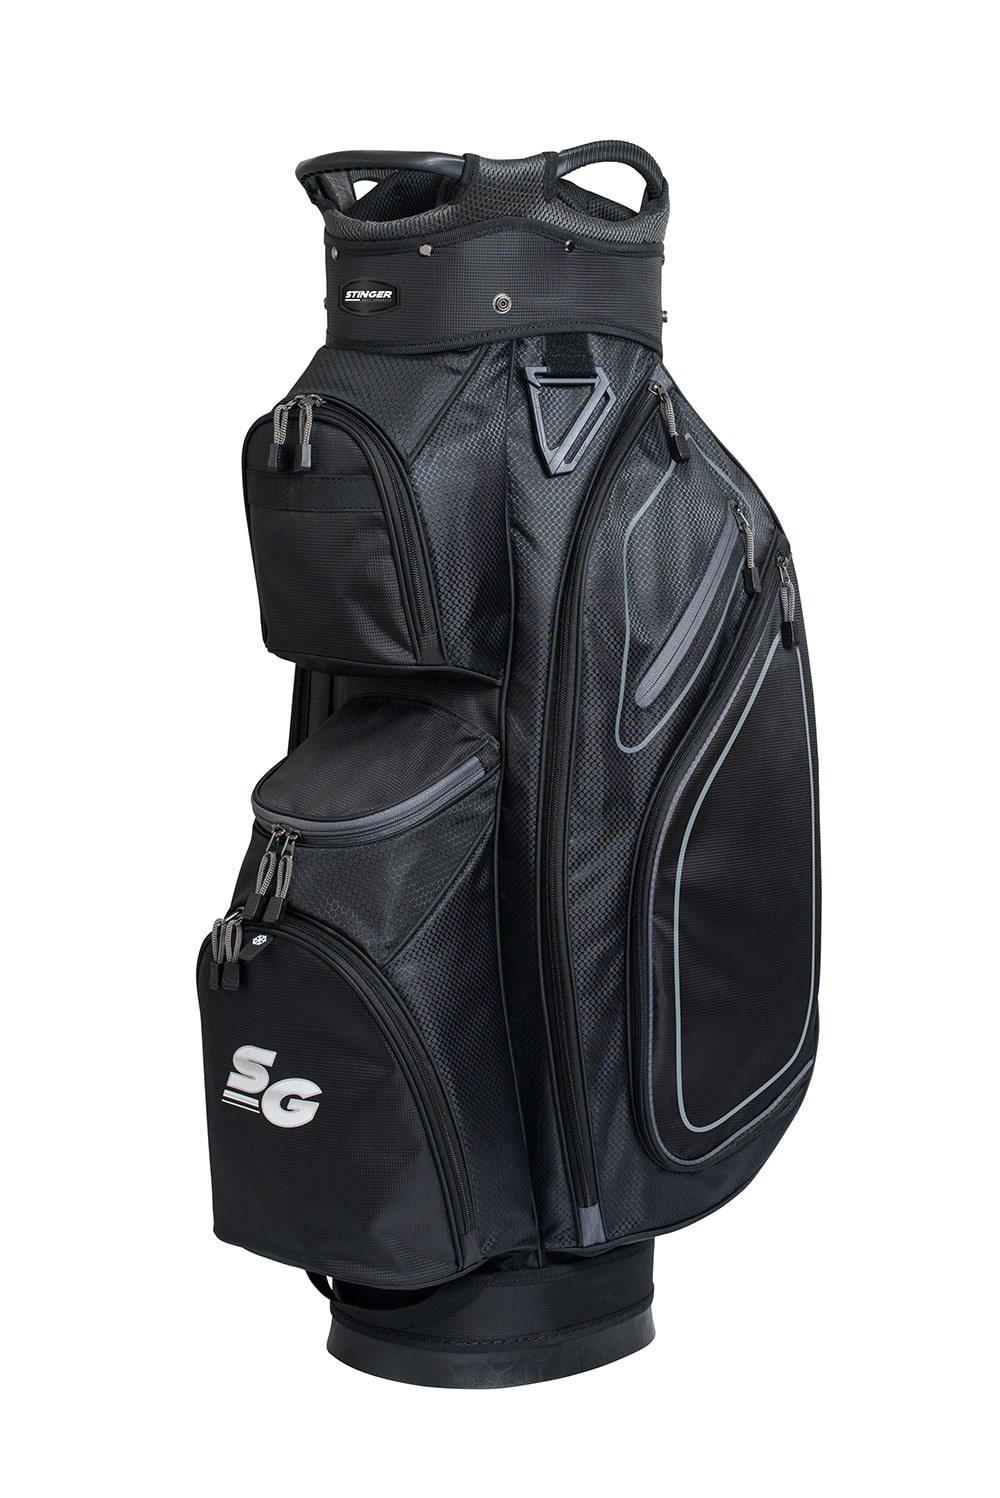 Stinger - Lightweight Bag AJM - Golf Autodrive Black/Grey